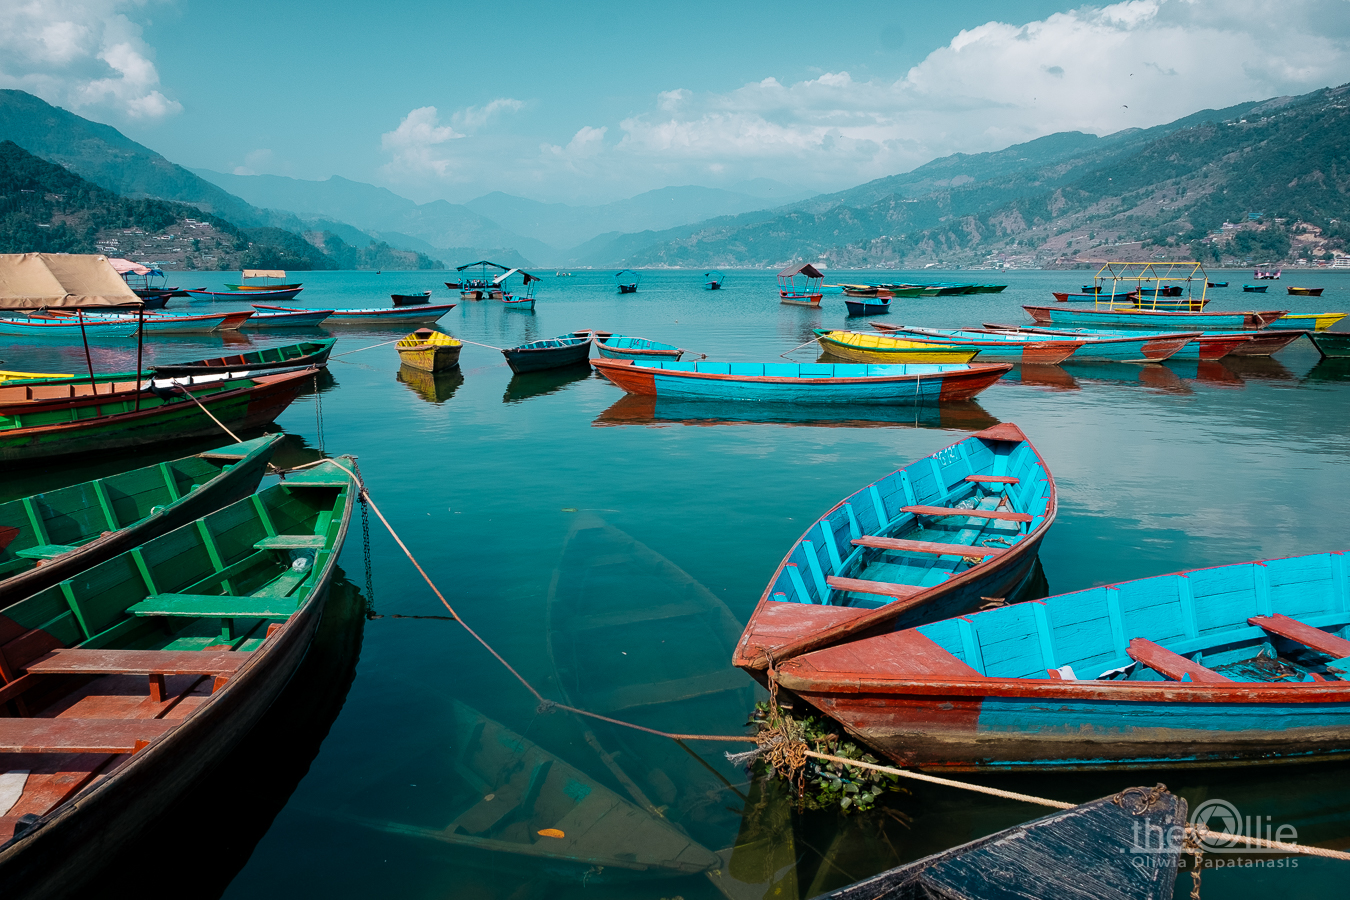 widok na masywy Annapurny, Dhaulagiri i Manaslu, jezioro Phewa Tal 